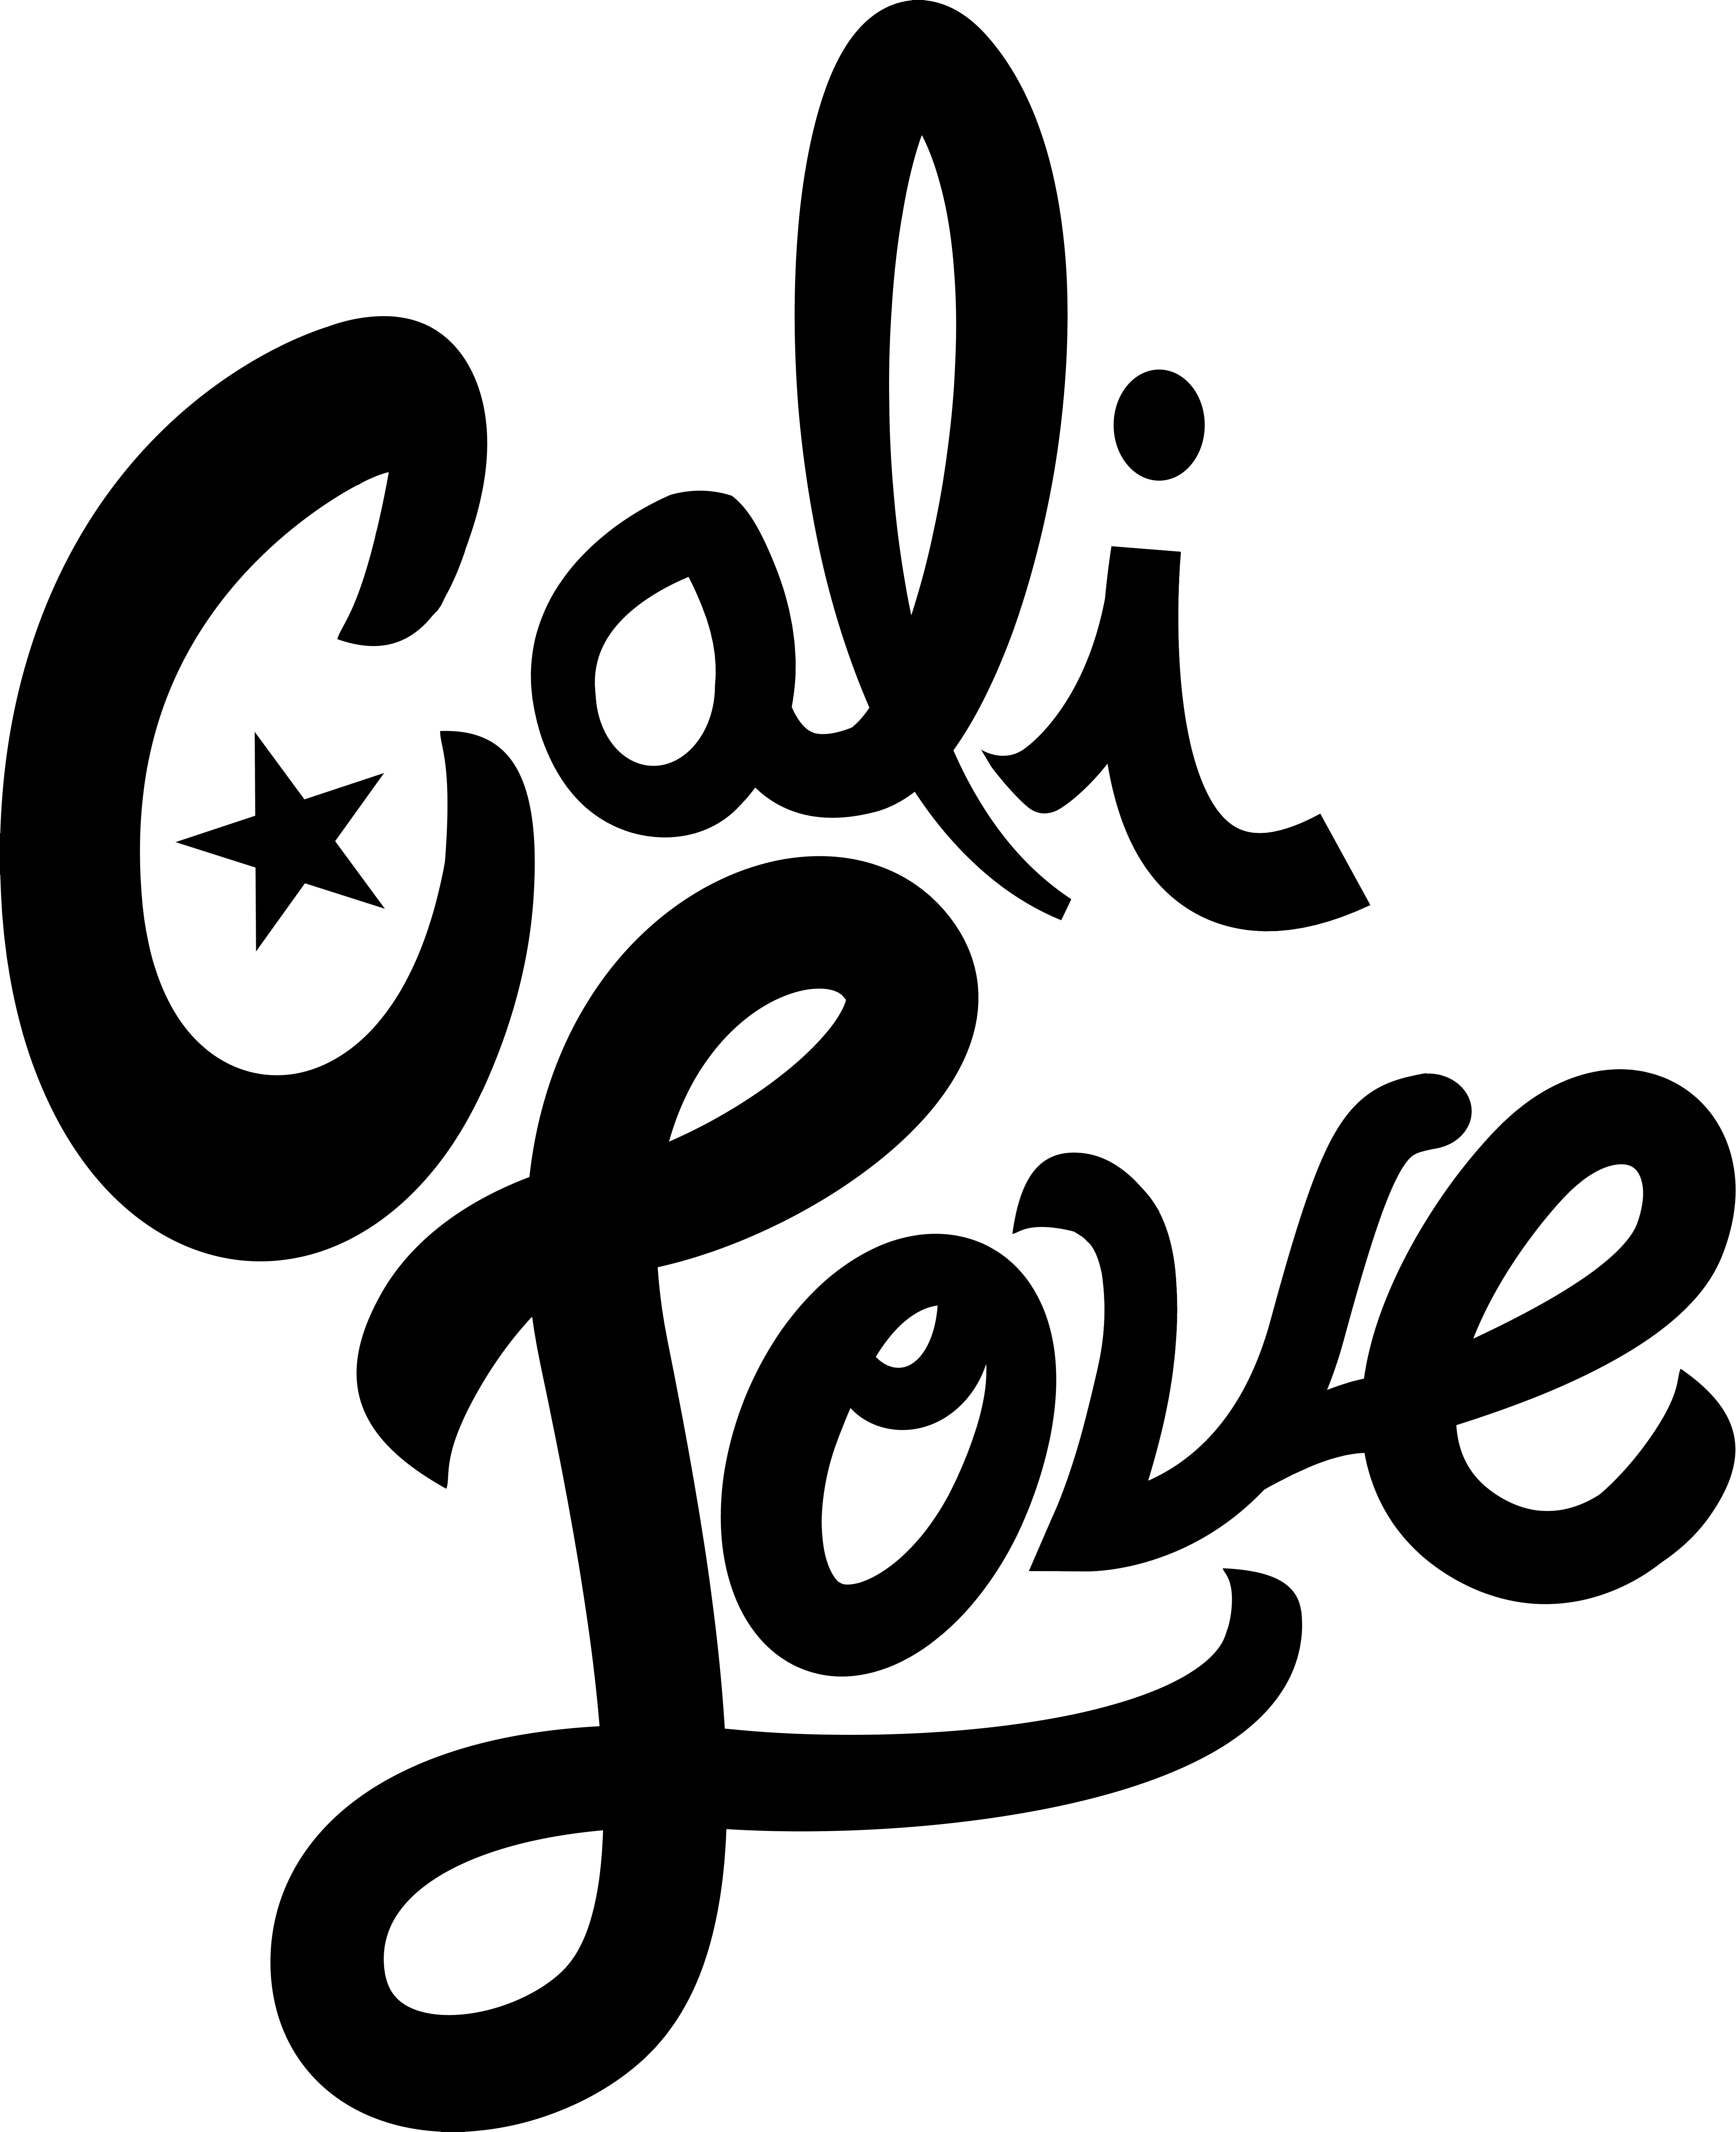 CALI LOVE